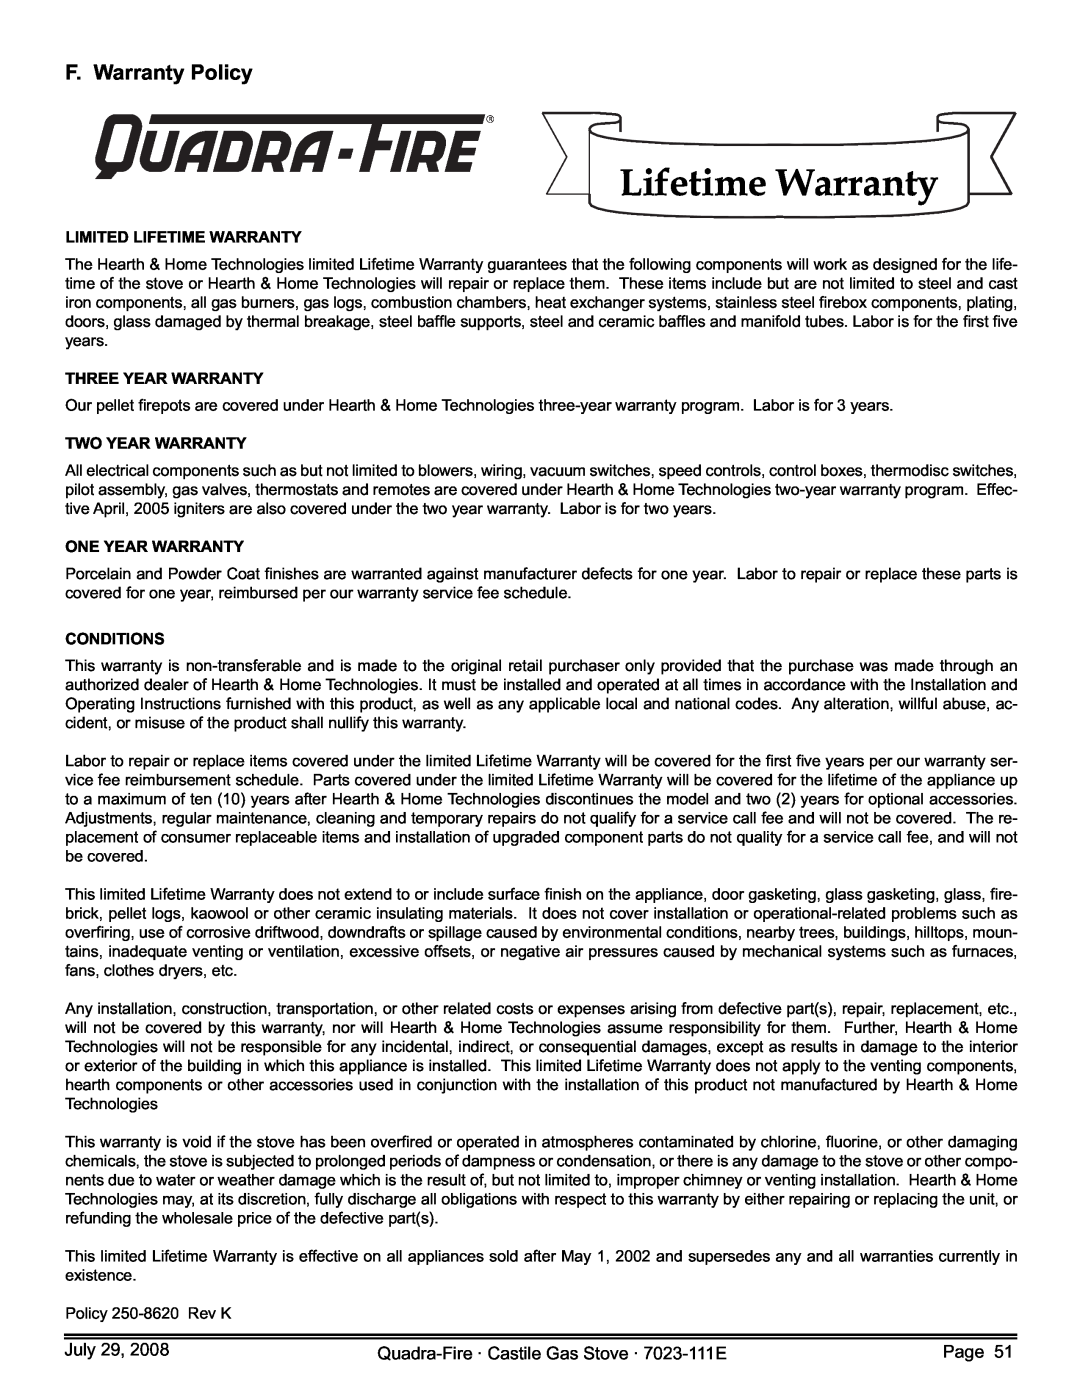 Quadra-Fire CASTILE-GAS-PMH F. Warranty Policy, Limited Lifetime Warranty, Three Year Warranty, Two Year Warranty 